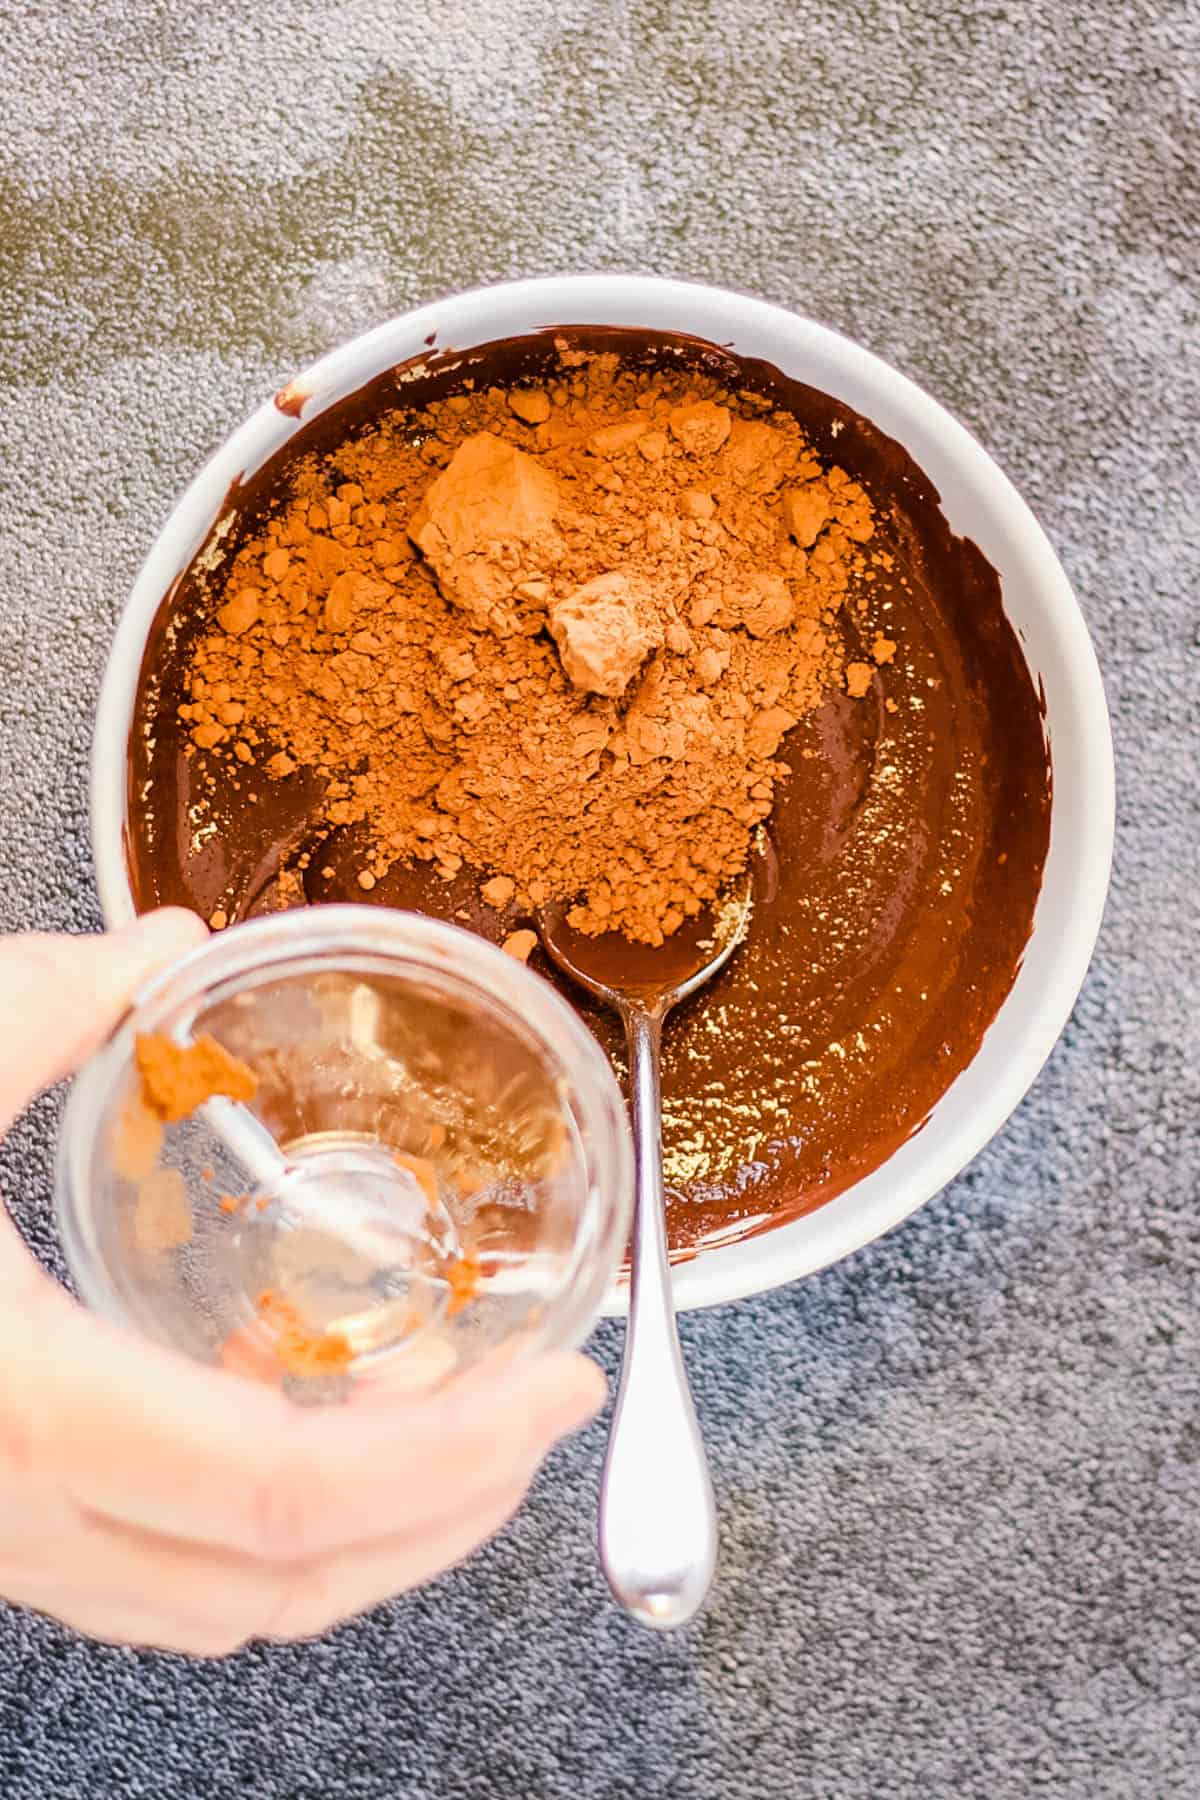 Adding cocoa powder to the chocolate.